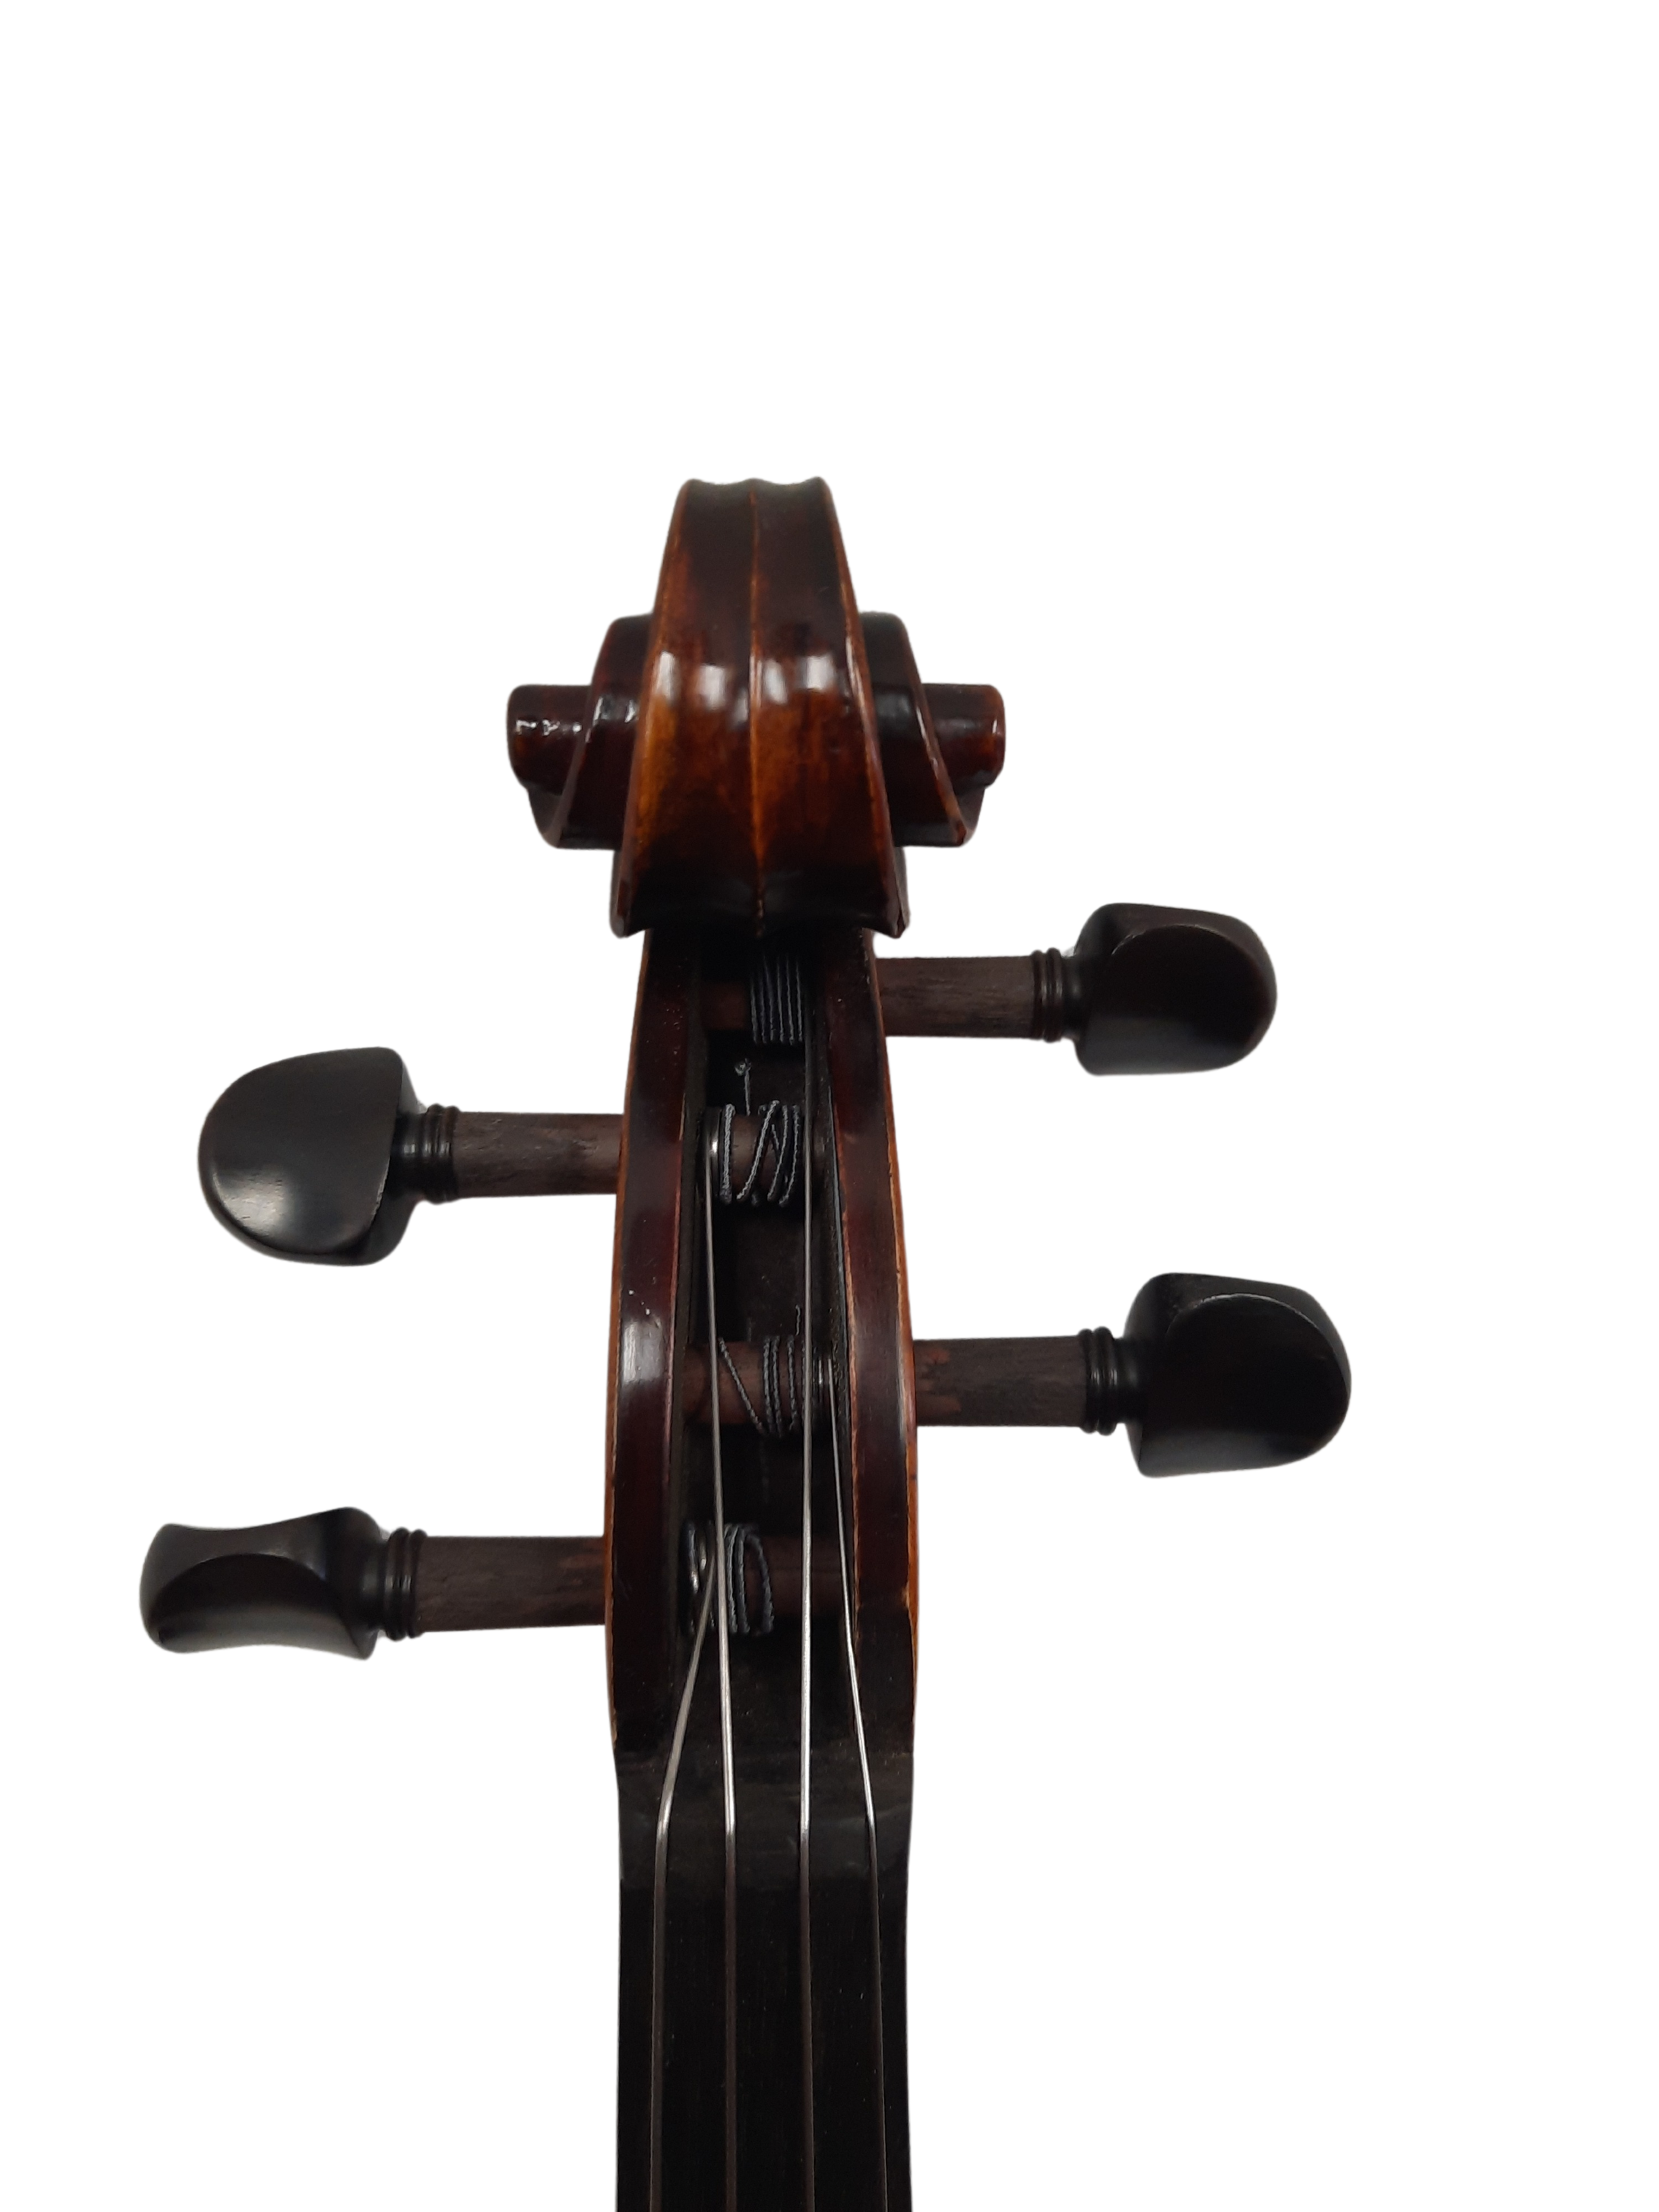 Angel Taylor Model A220 Viola